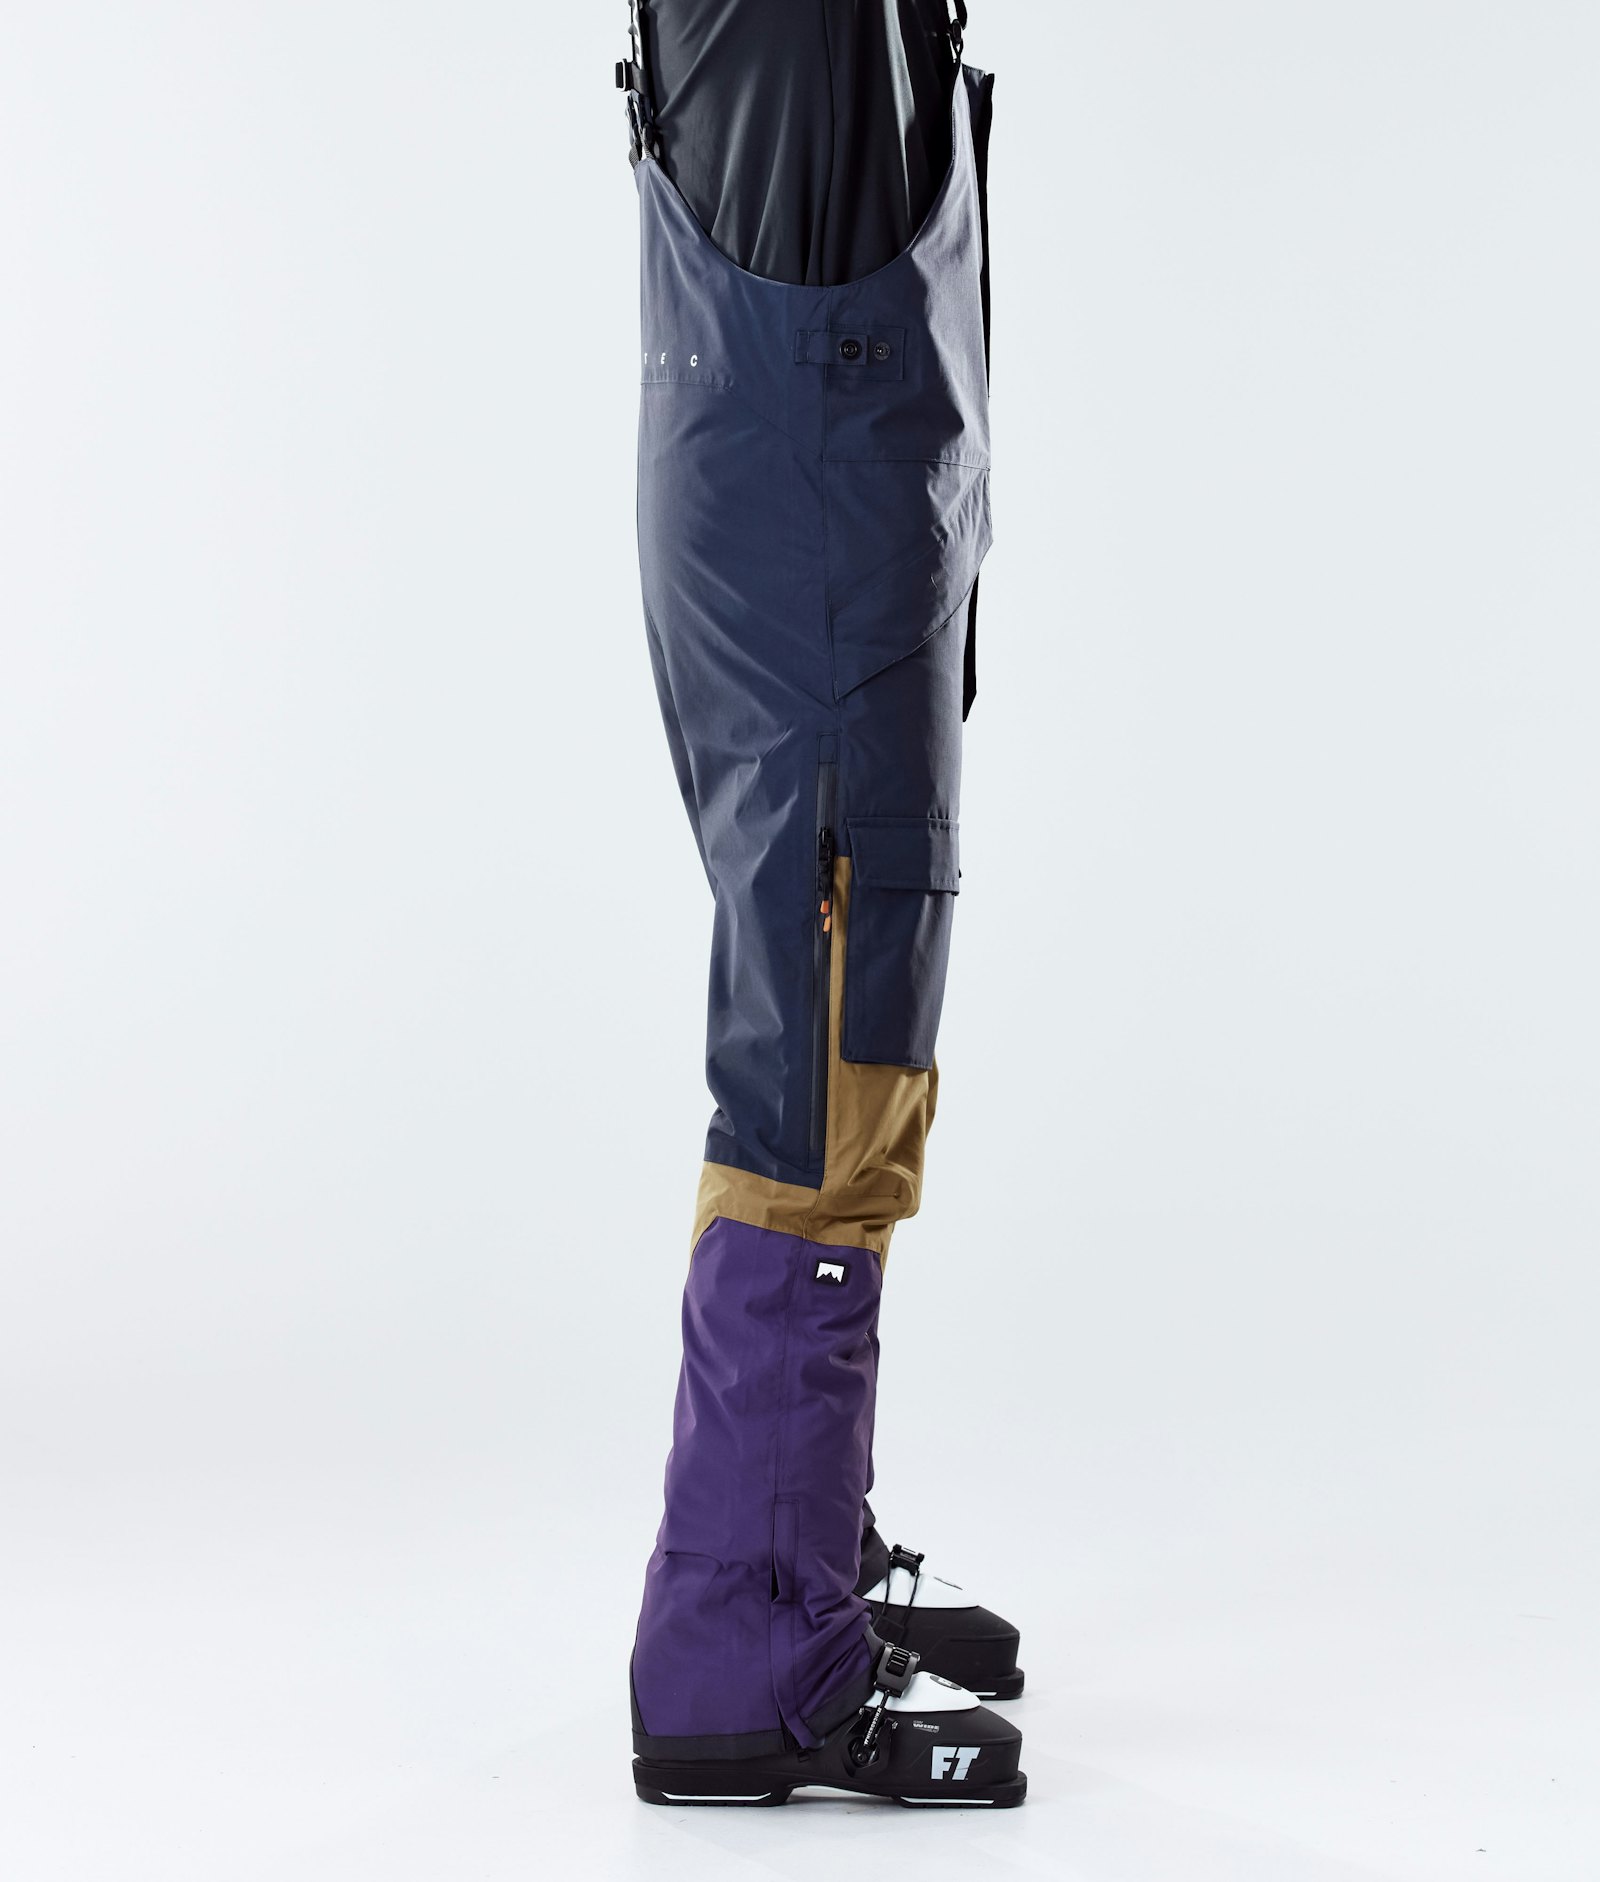 Fawk 2020 Pantalon de Ski Homme Marine/Gold/Purple